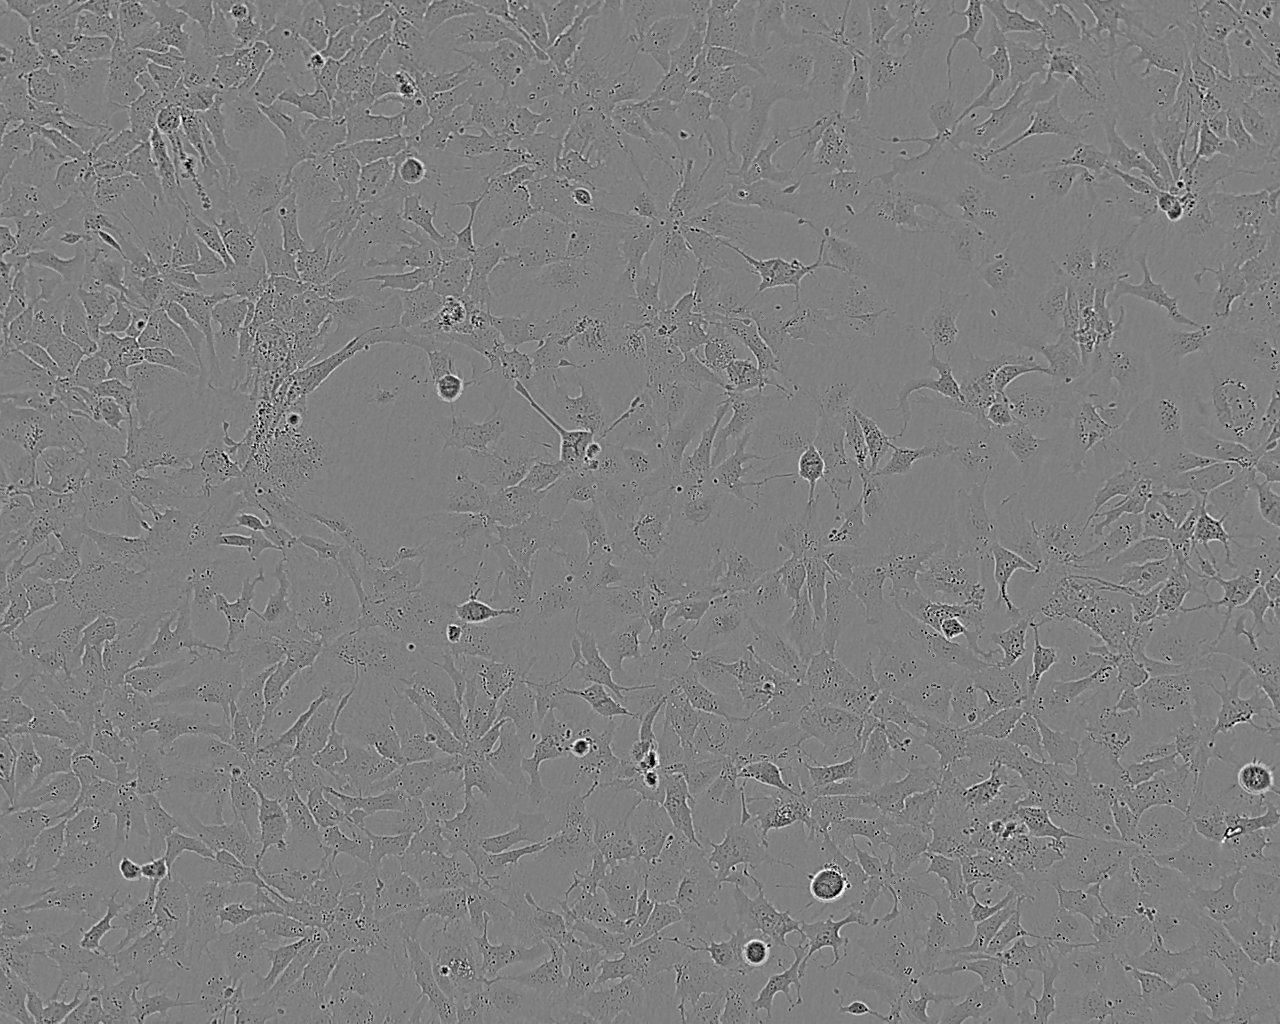 NCI-H1105 Cell|人小细胞肺癌细胞